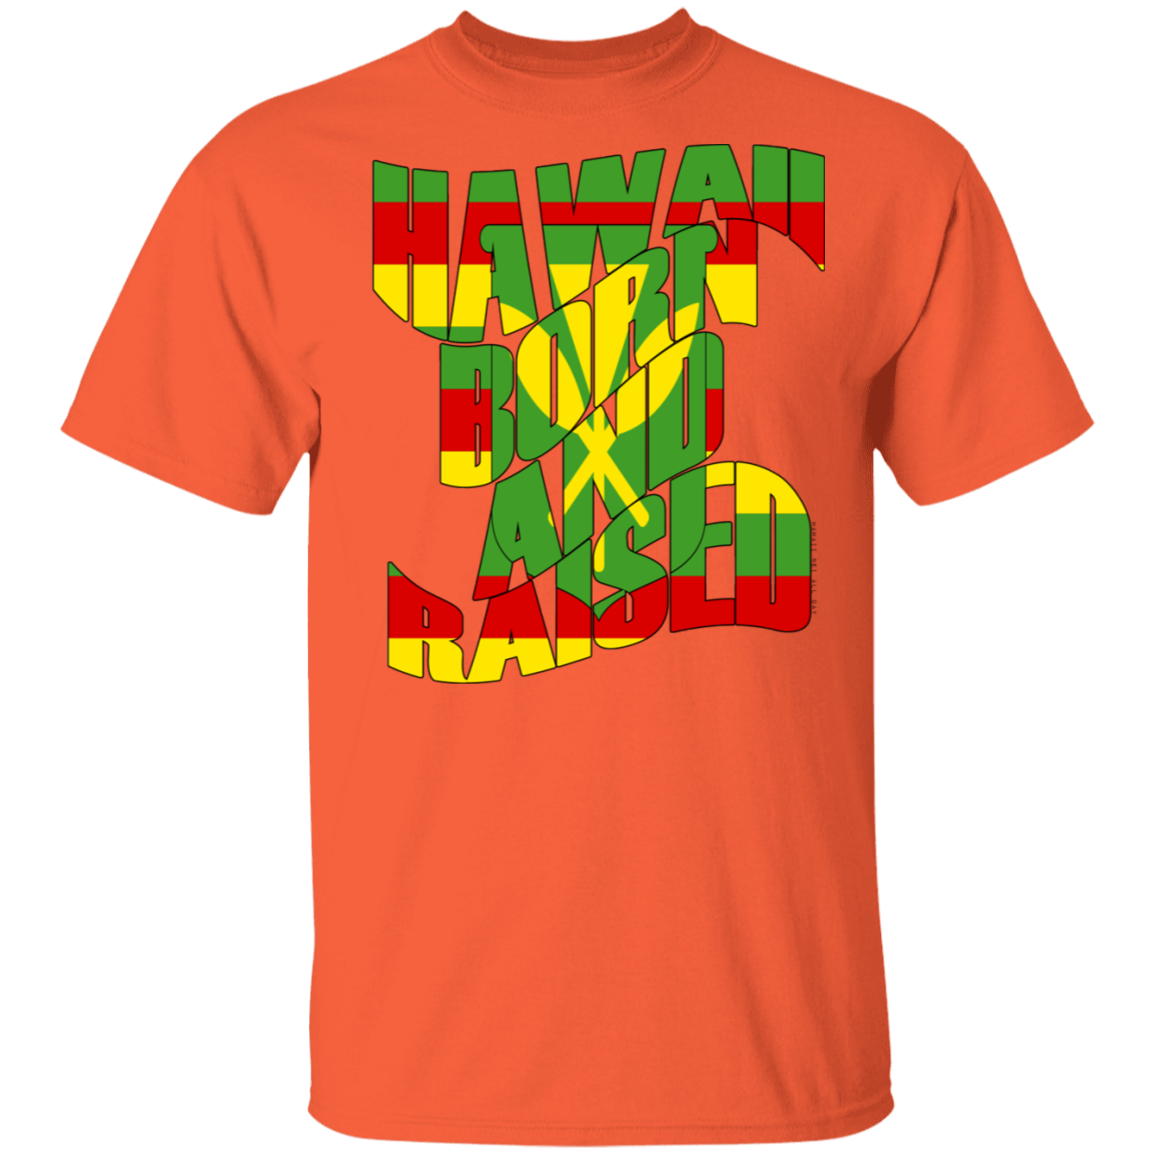 Hawaii Born and Raised Kanaka Maoli T-Shirt, T-Shirts, Hawaii Nei All Day